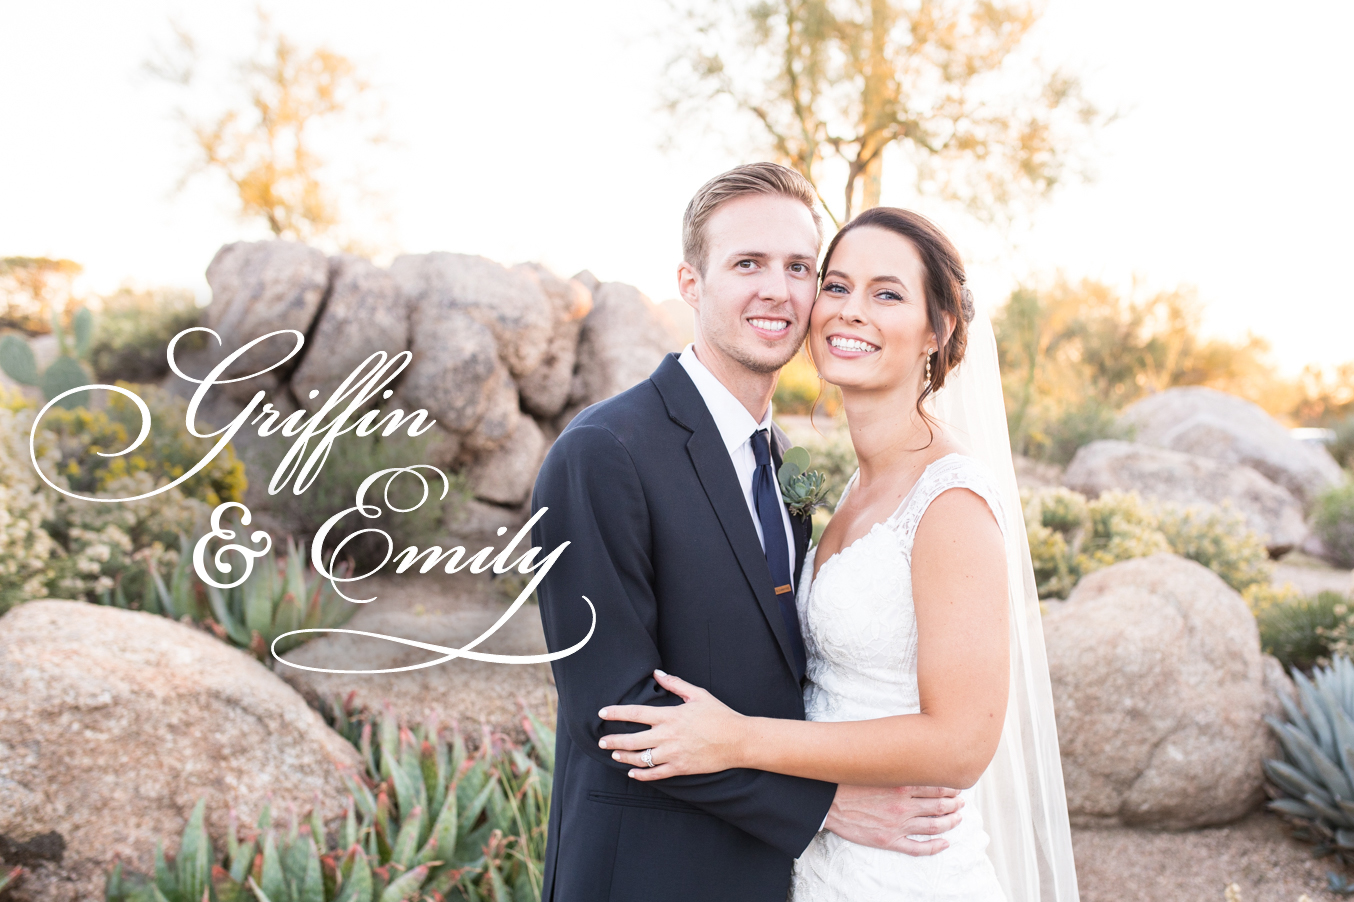 Troon North Wedding in Scottsdale Arizona by Brooke & Doug Photography